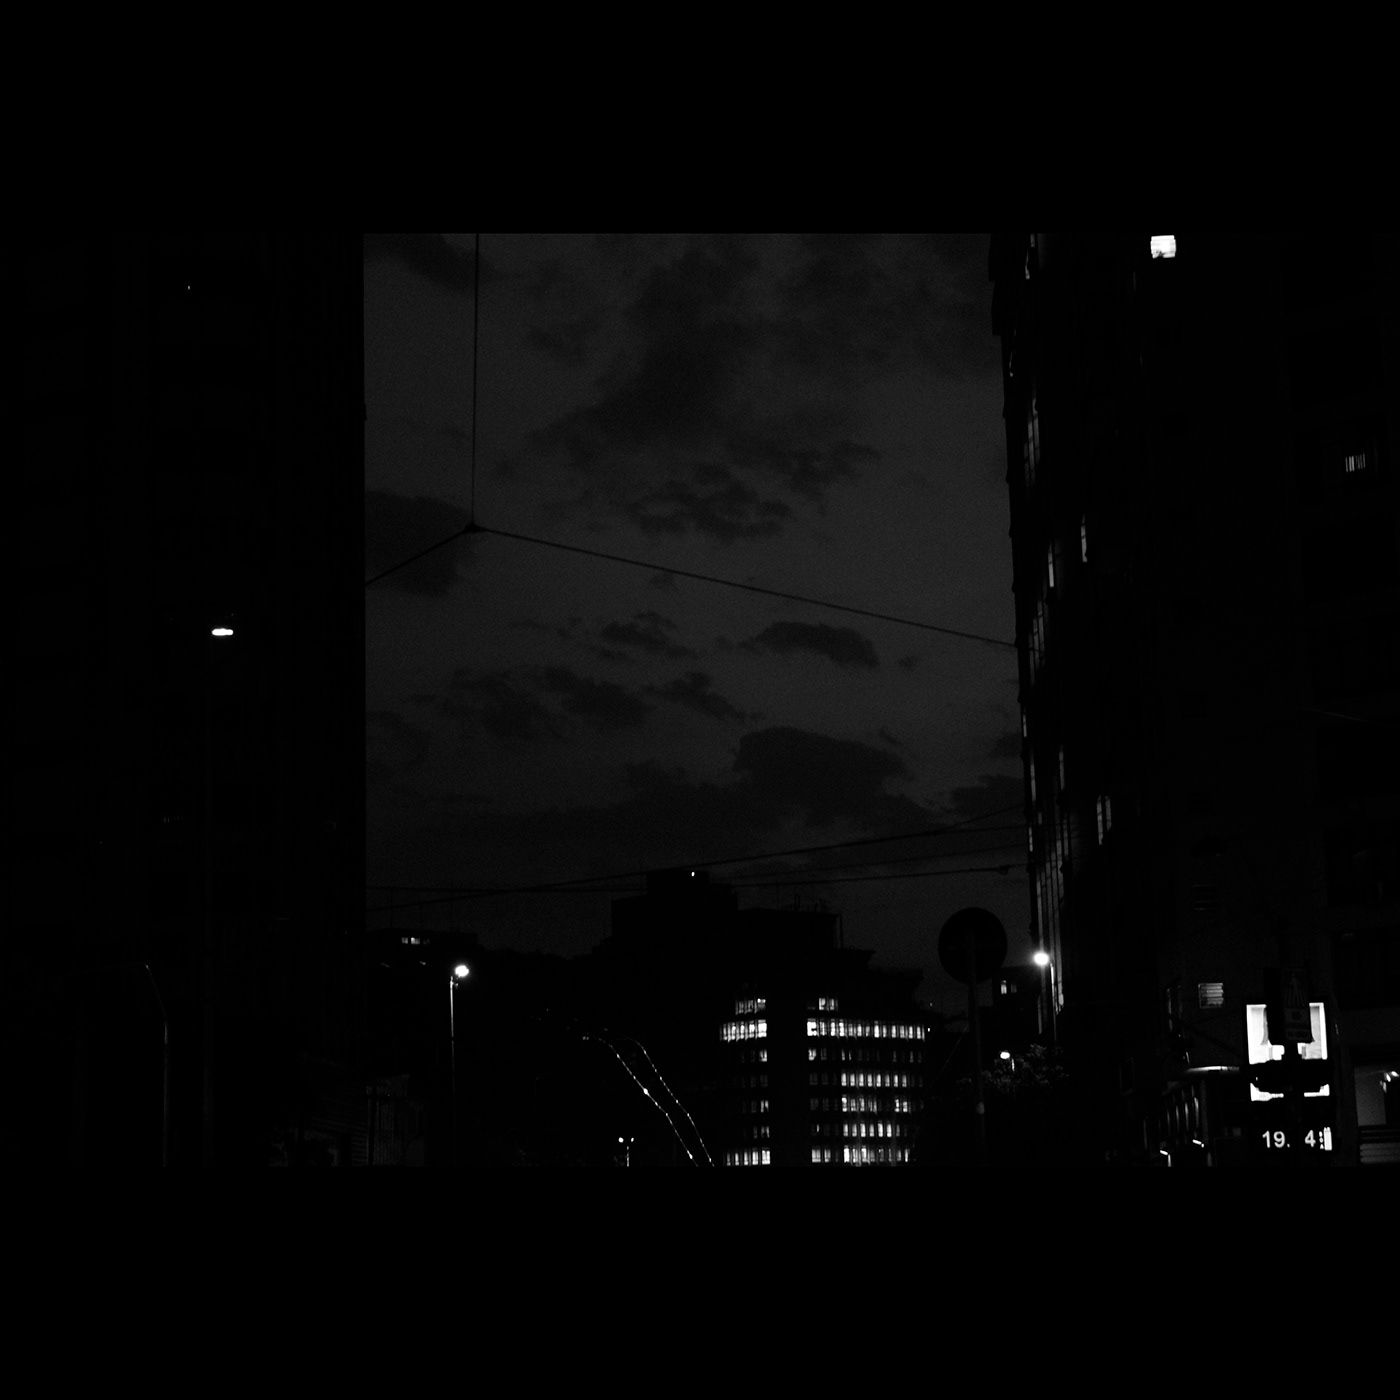 noir Street concrete neon